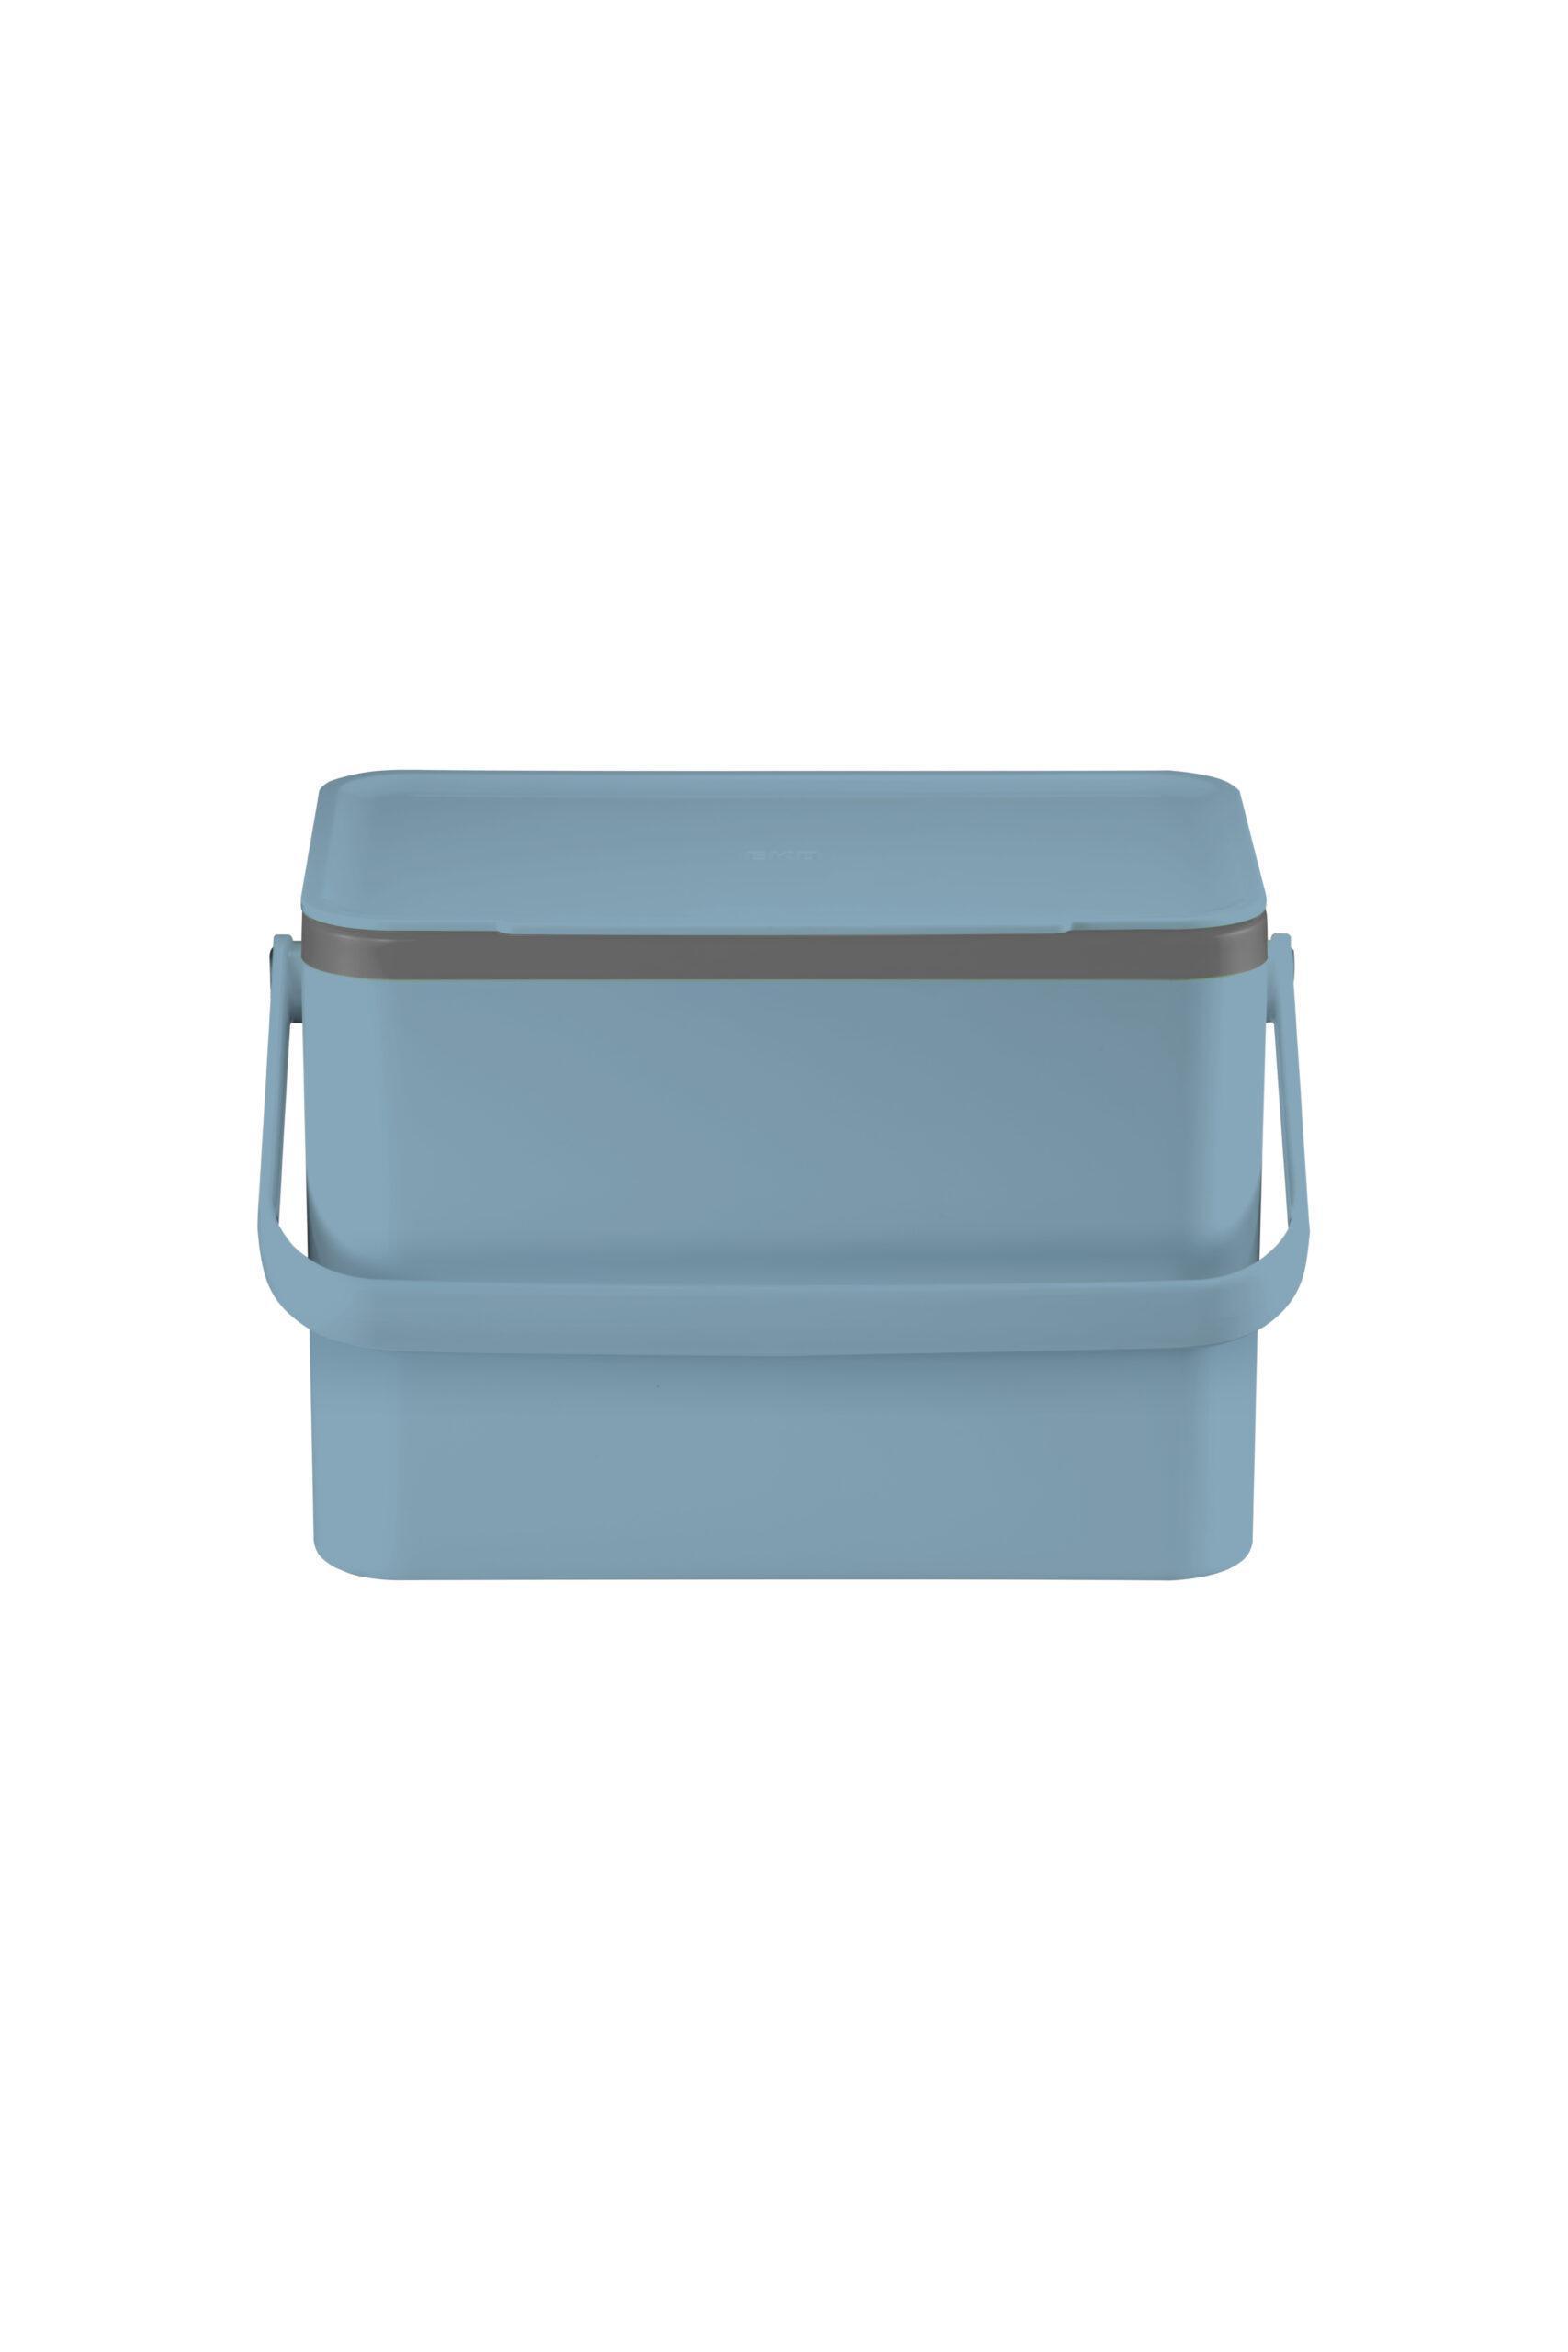 Food Waste Caddy 4L Small Kitchen Bin with Antibacterial Properties EKO Blue 